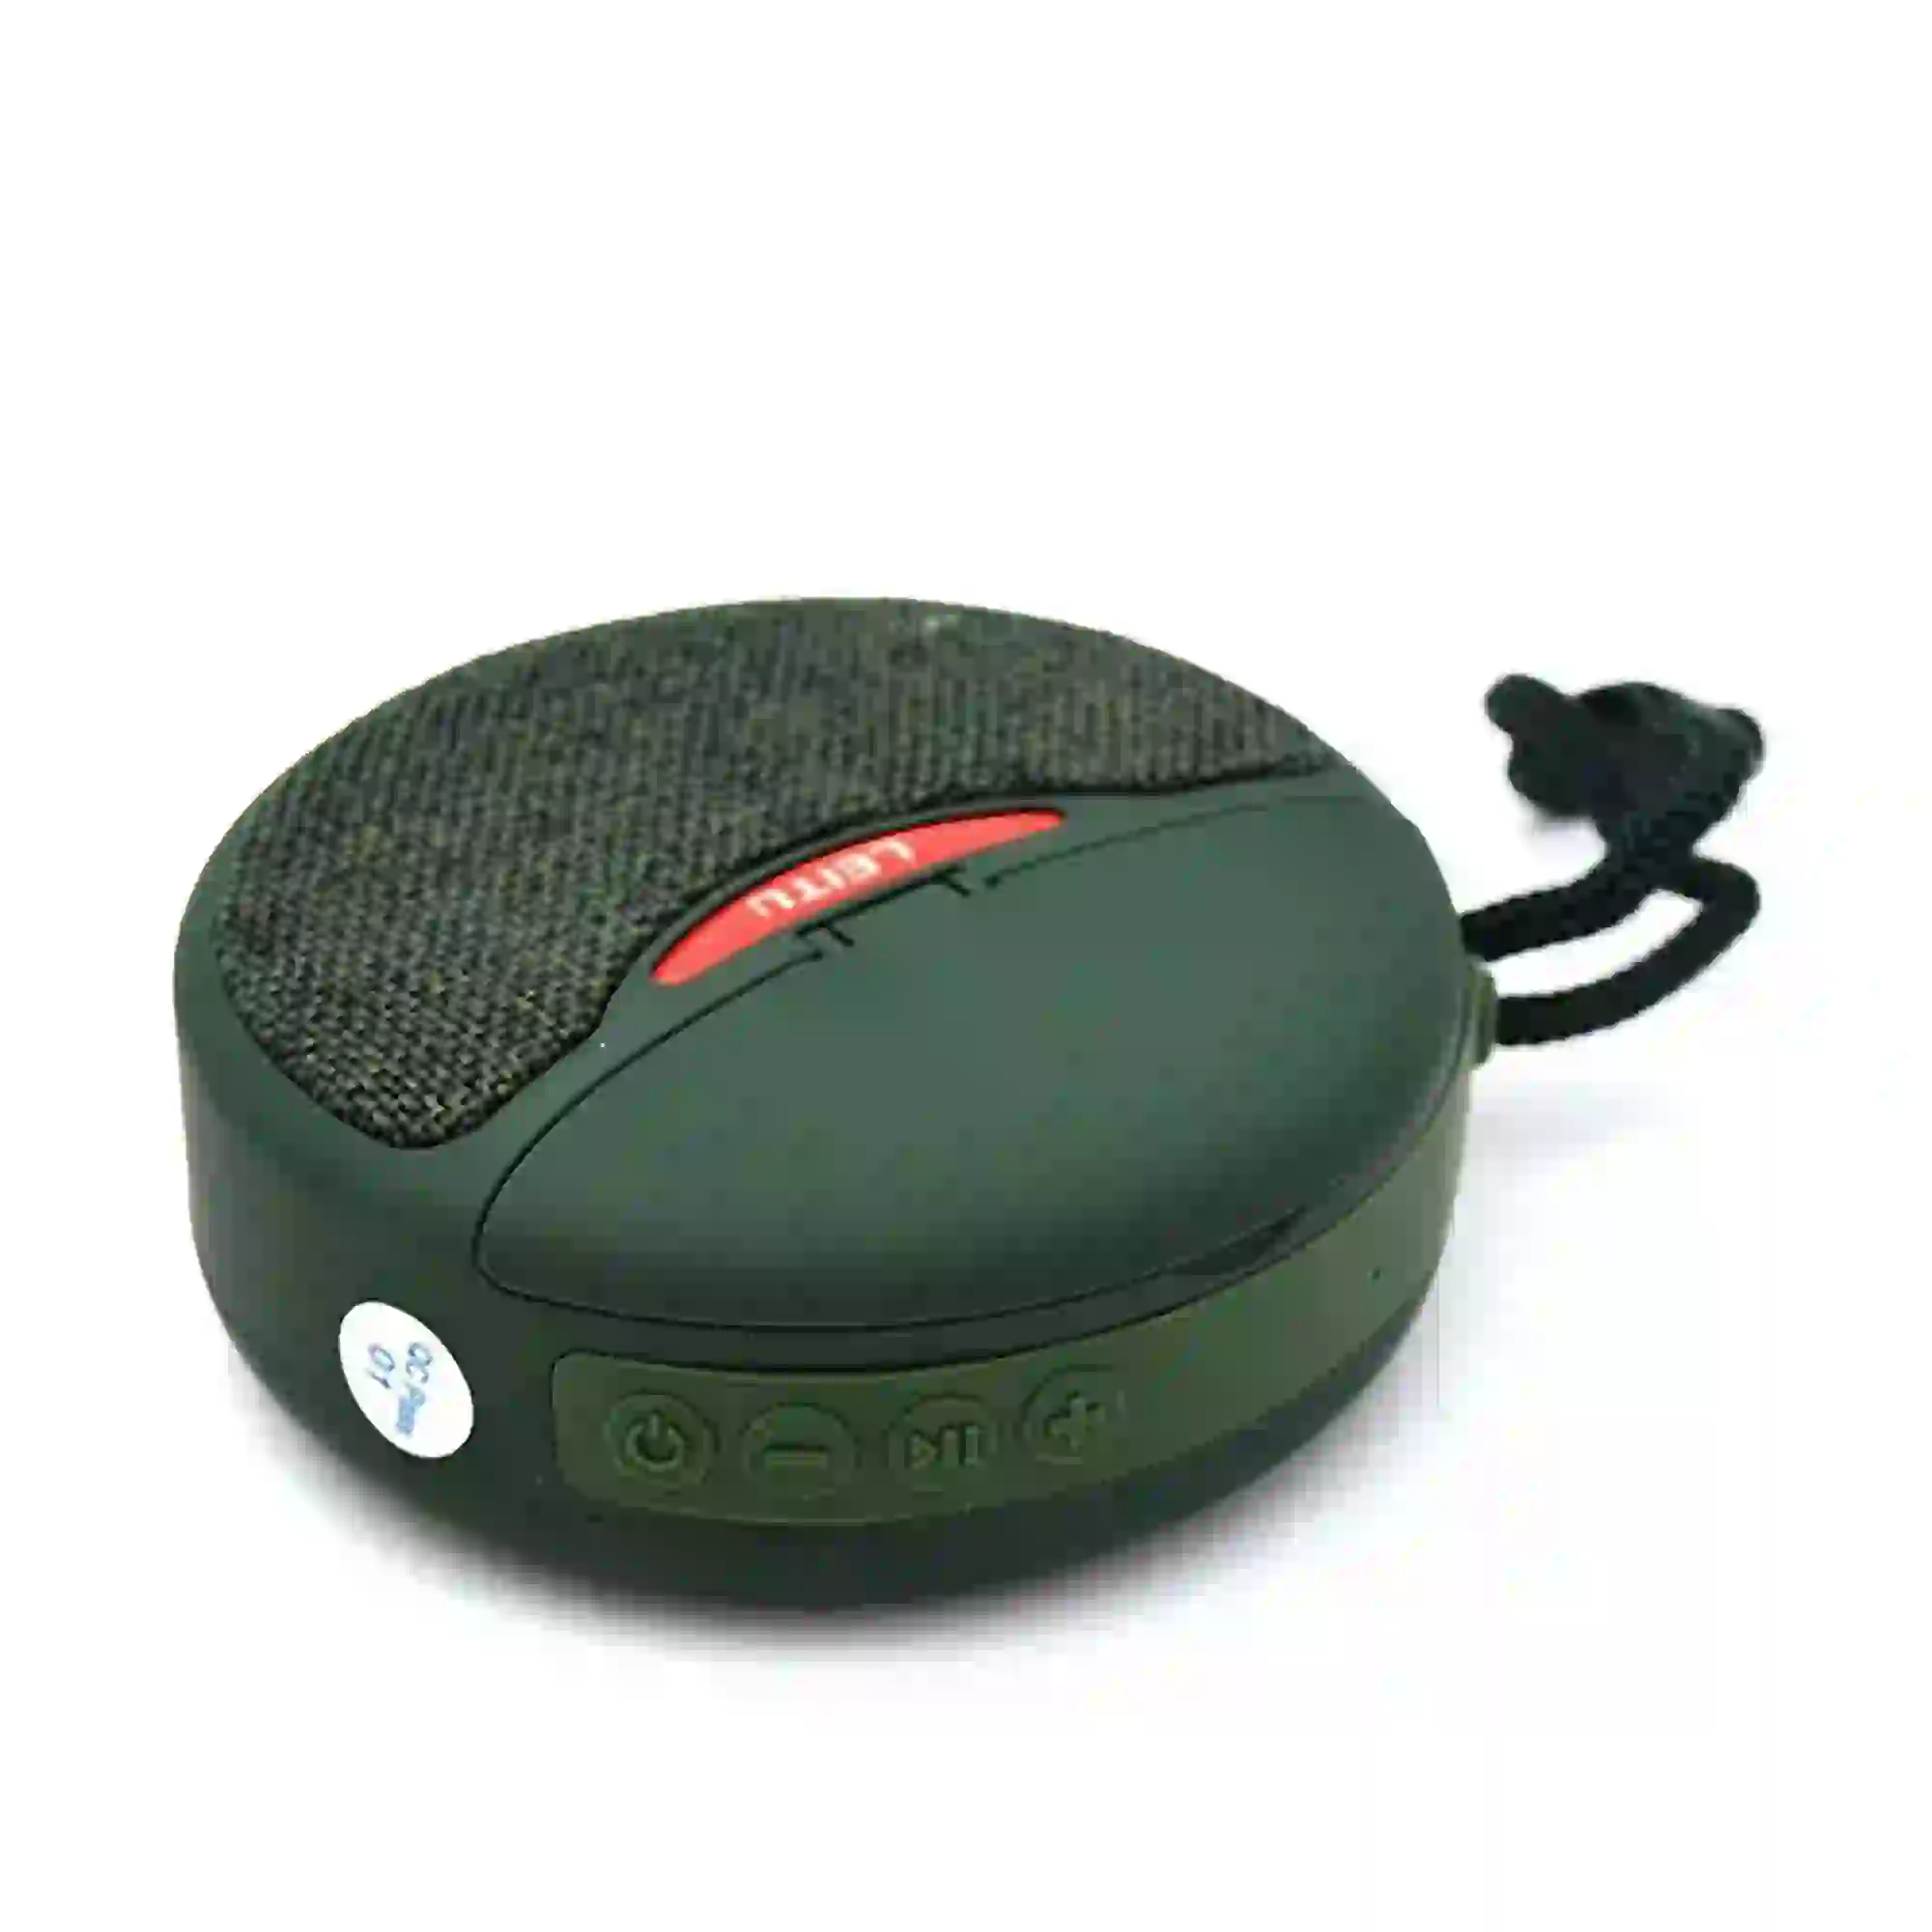 اسپیکر بلوتوثی برند Leitu مدل LK-29 اورجینال | Leitu LK-29 Portable Bluetooth Speaker